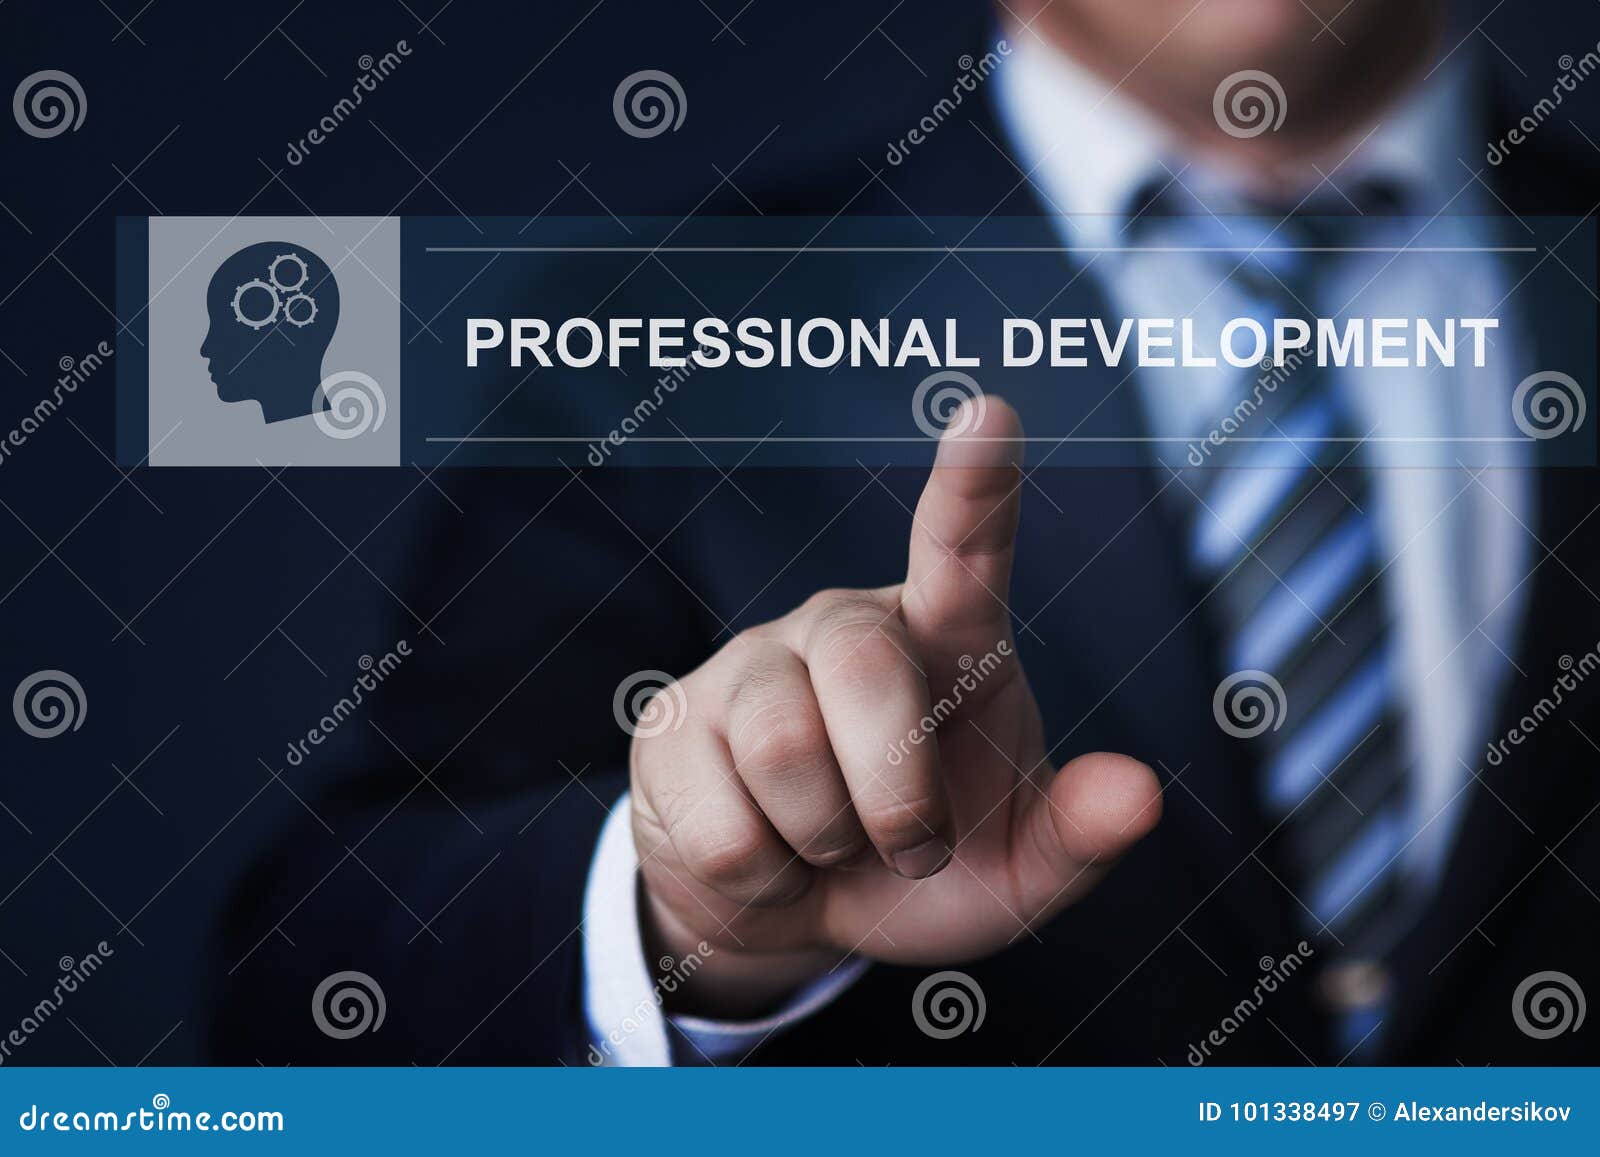 professional development education knowledge training business internet technology concept